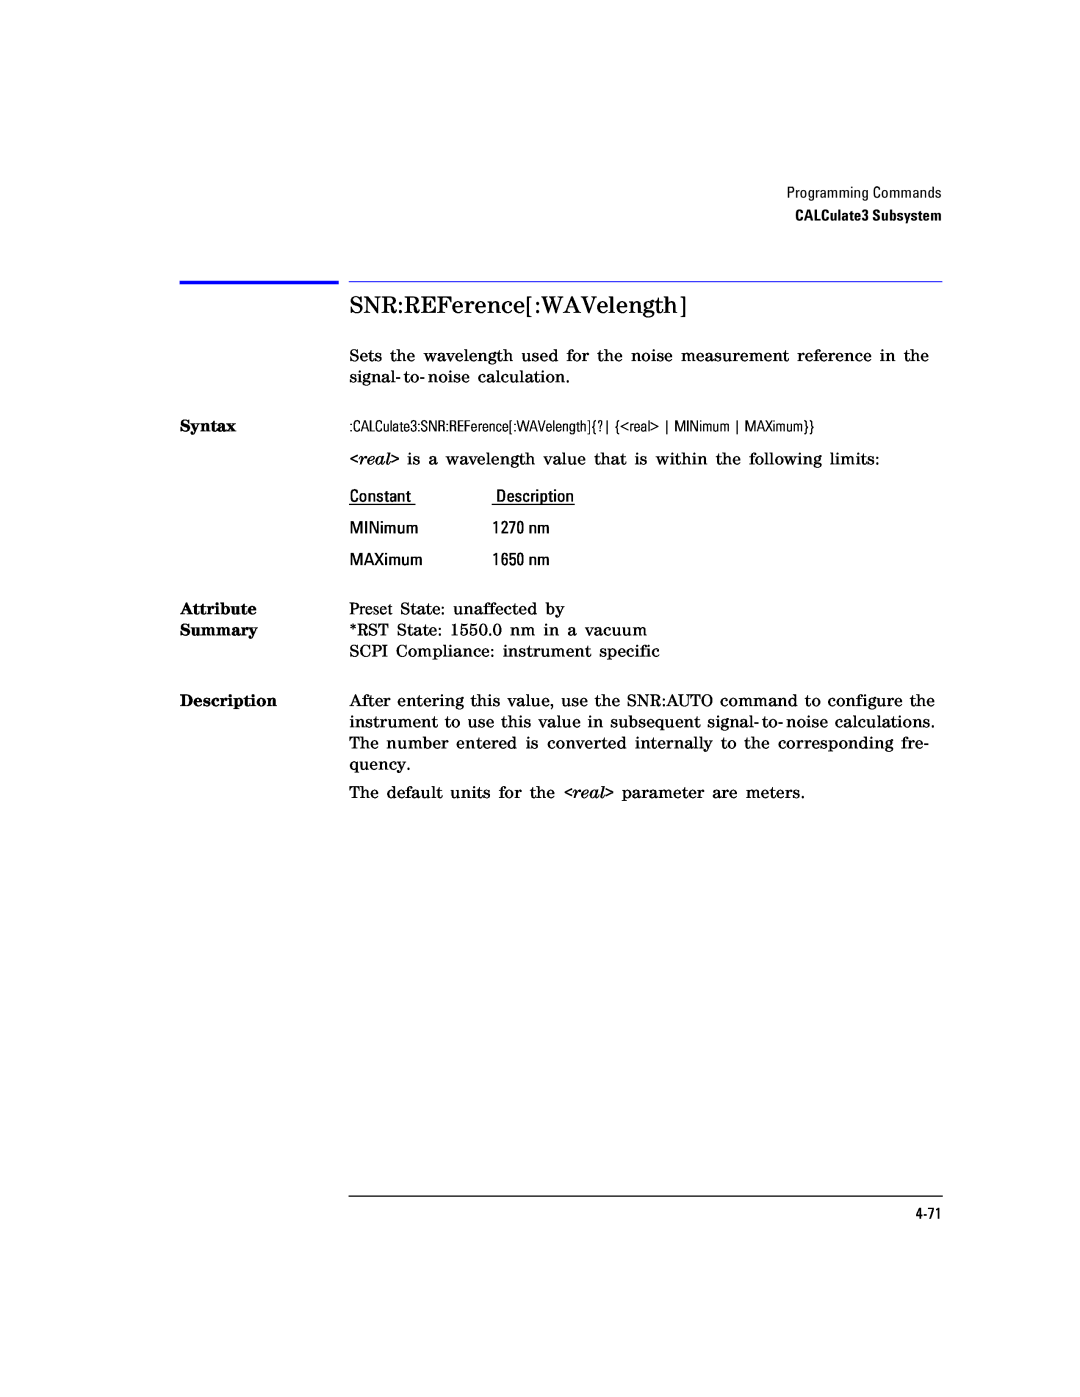 Agilent Technologies Agilent 86120C manual SNRREFerenceWAVelength, Syntax, Attribute, Summary, Description 